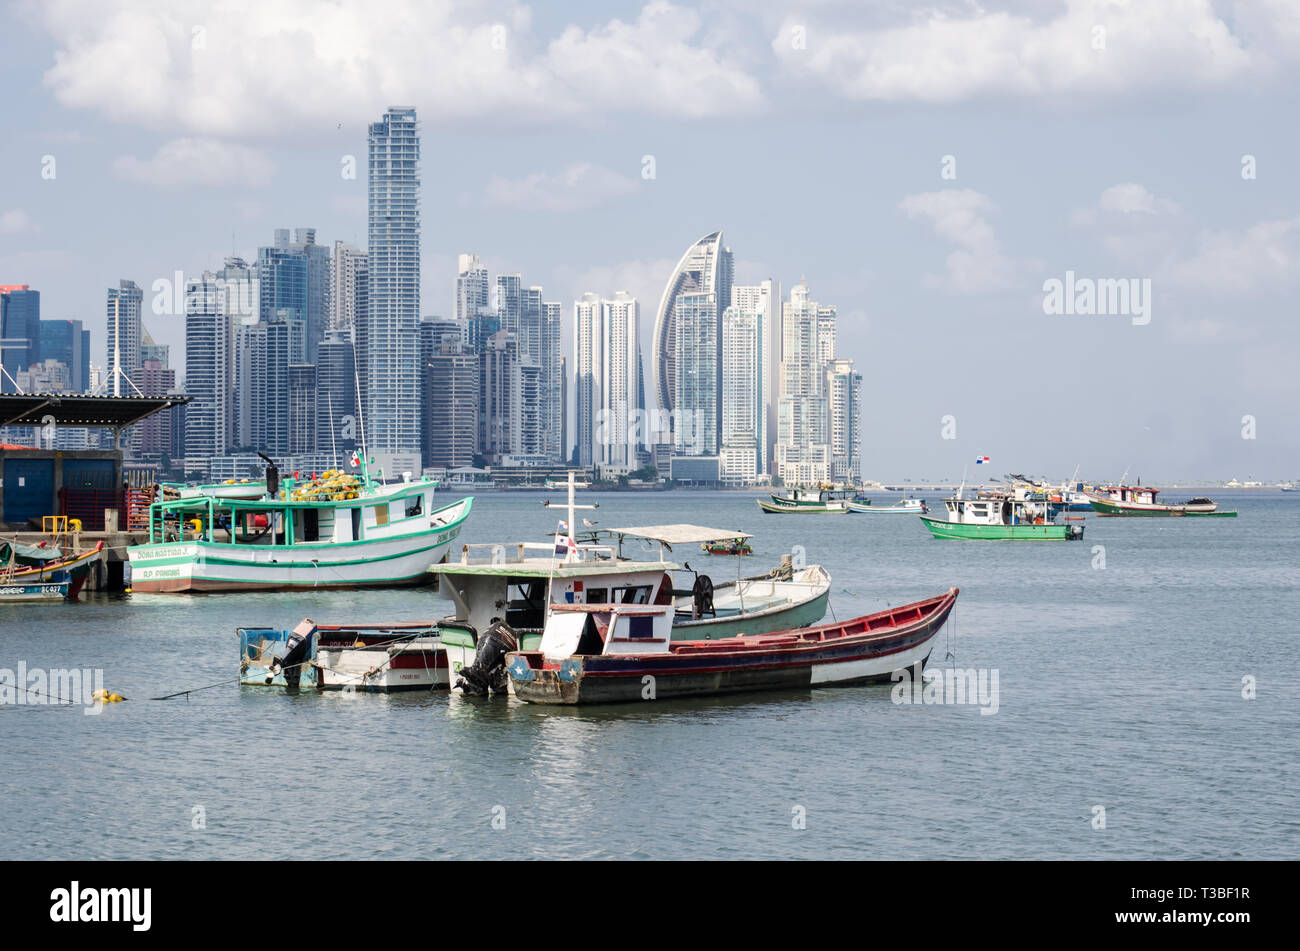 Panama City skyline as seen from the Boardwalk Stock Photo